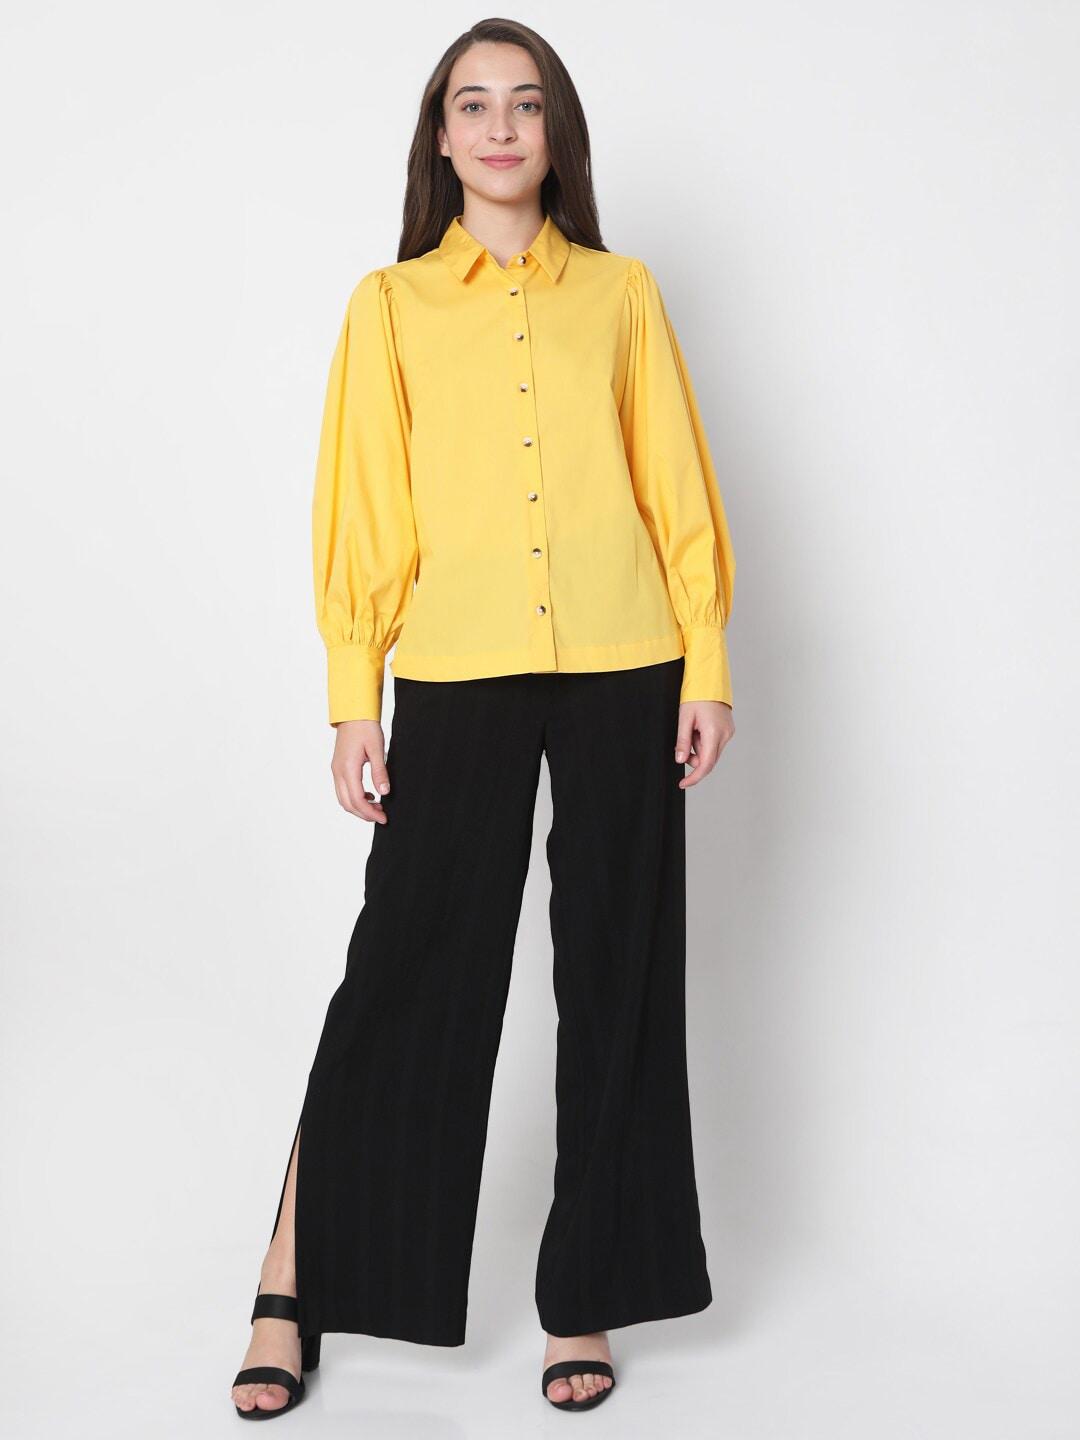 Vero Moda Women Yellow Solid Regular-Fit Casual Shirt